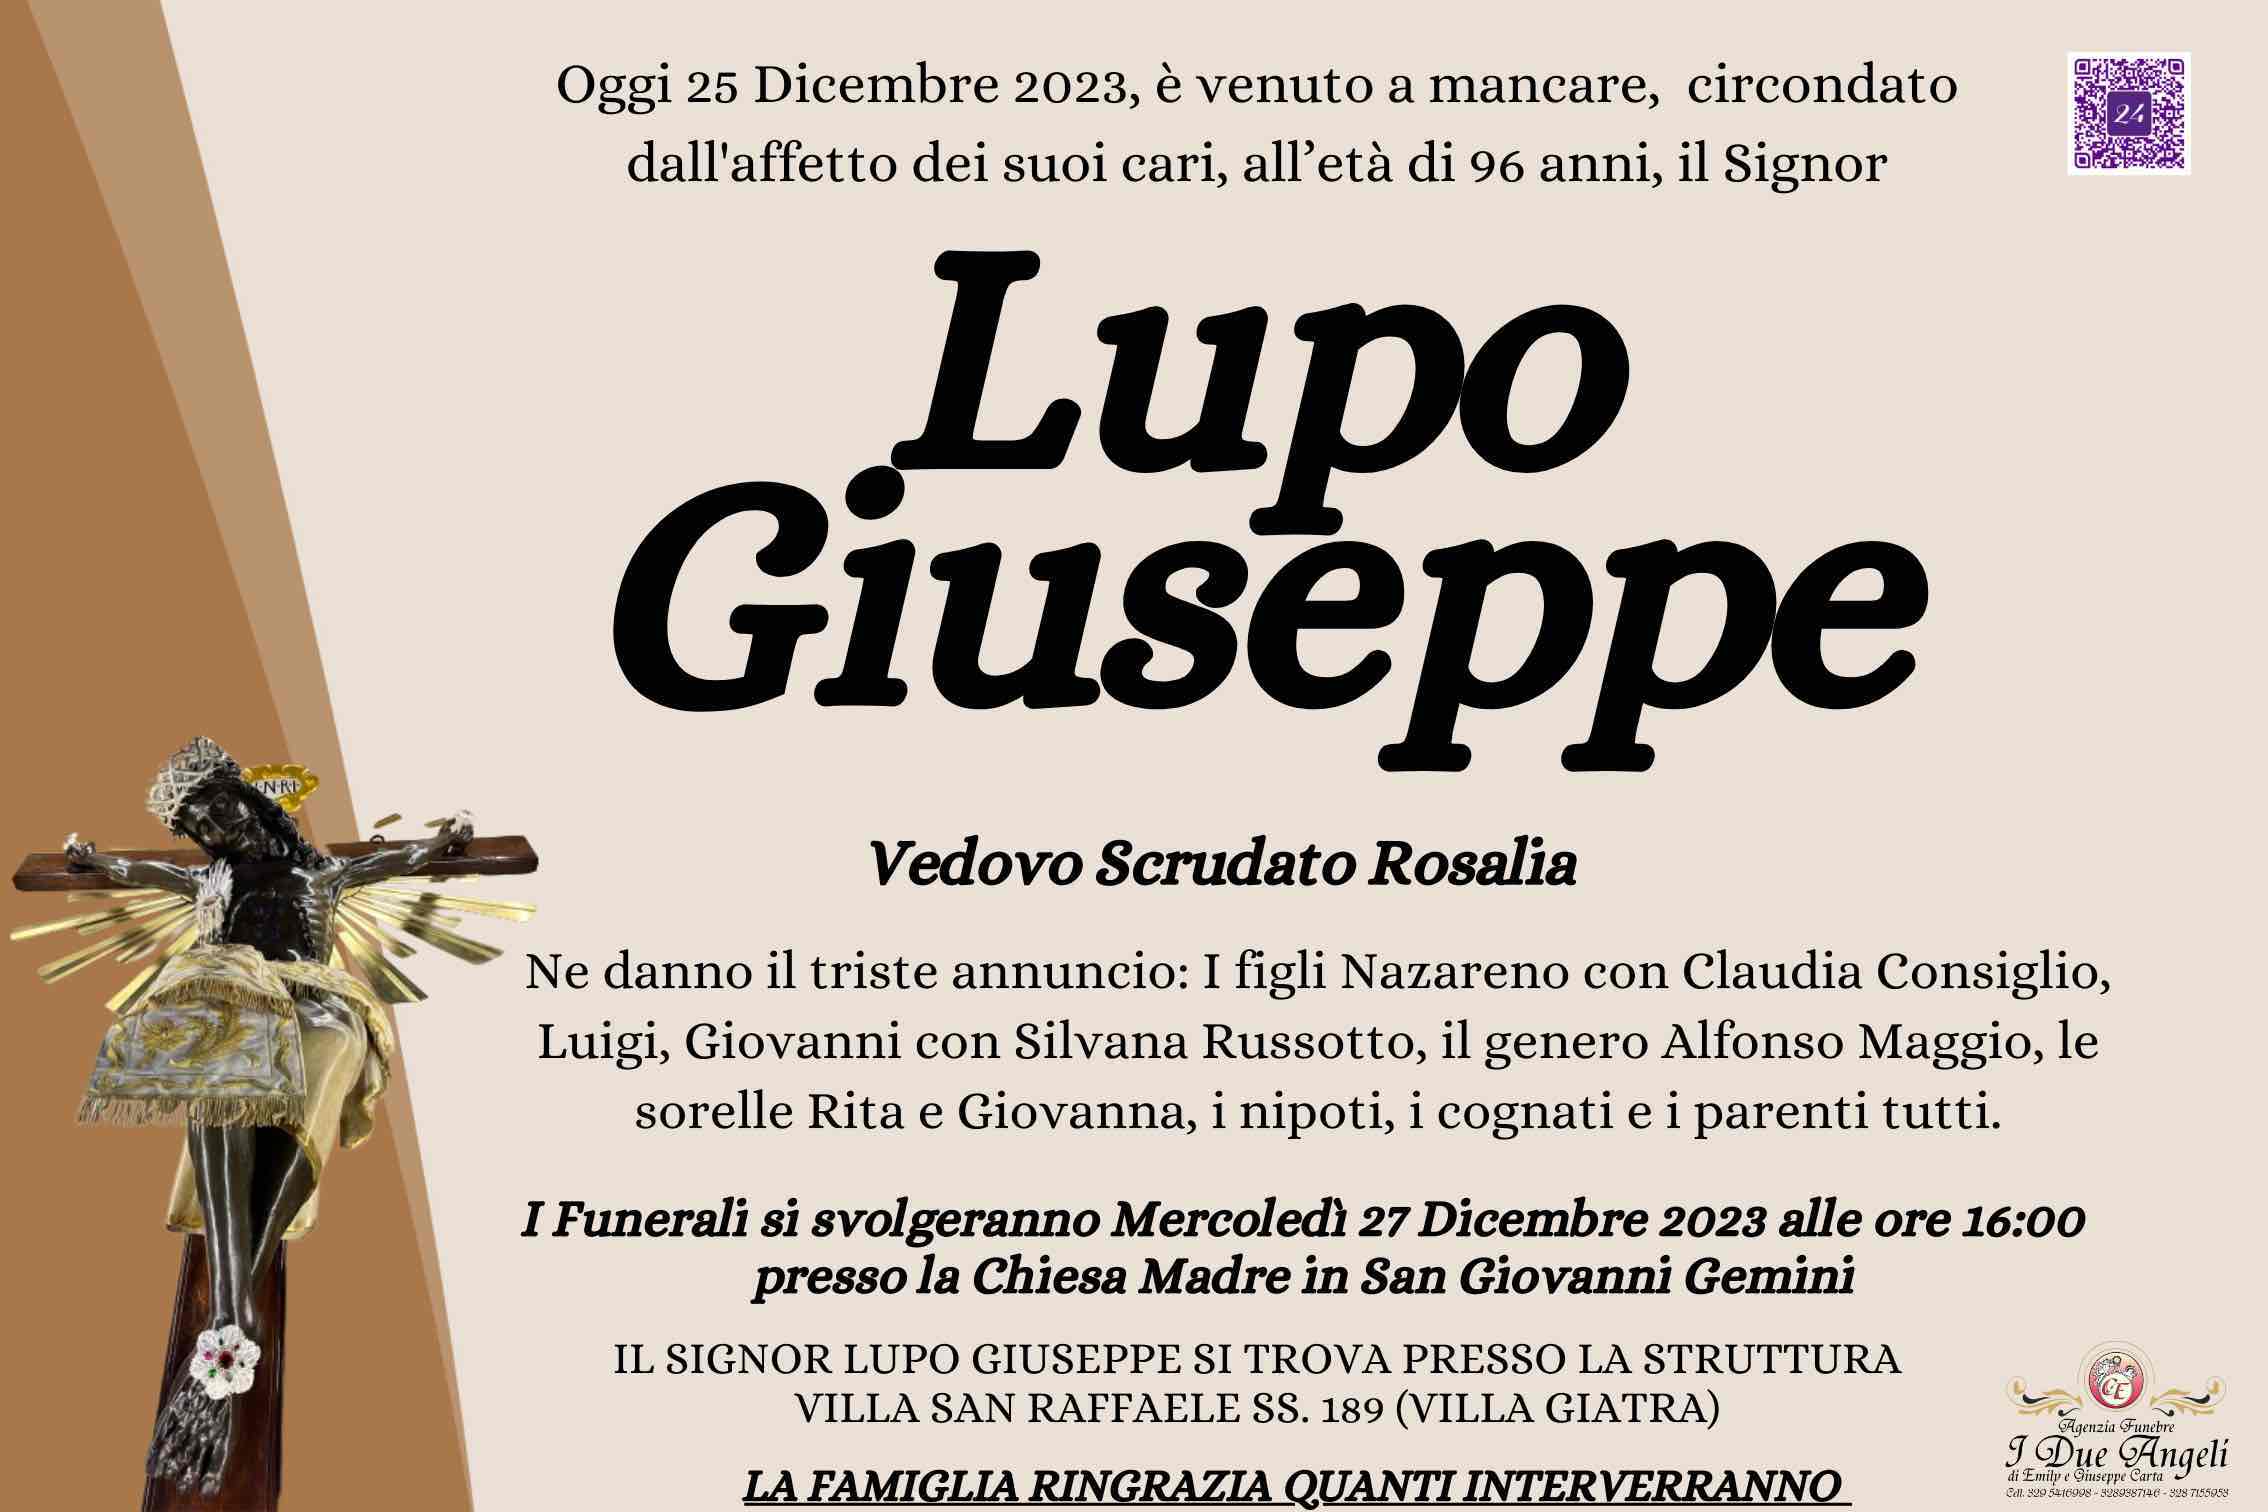 Giuseppe Lupo